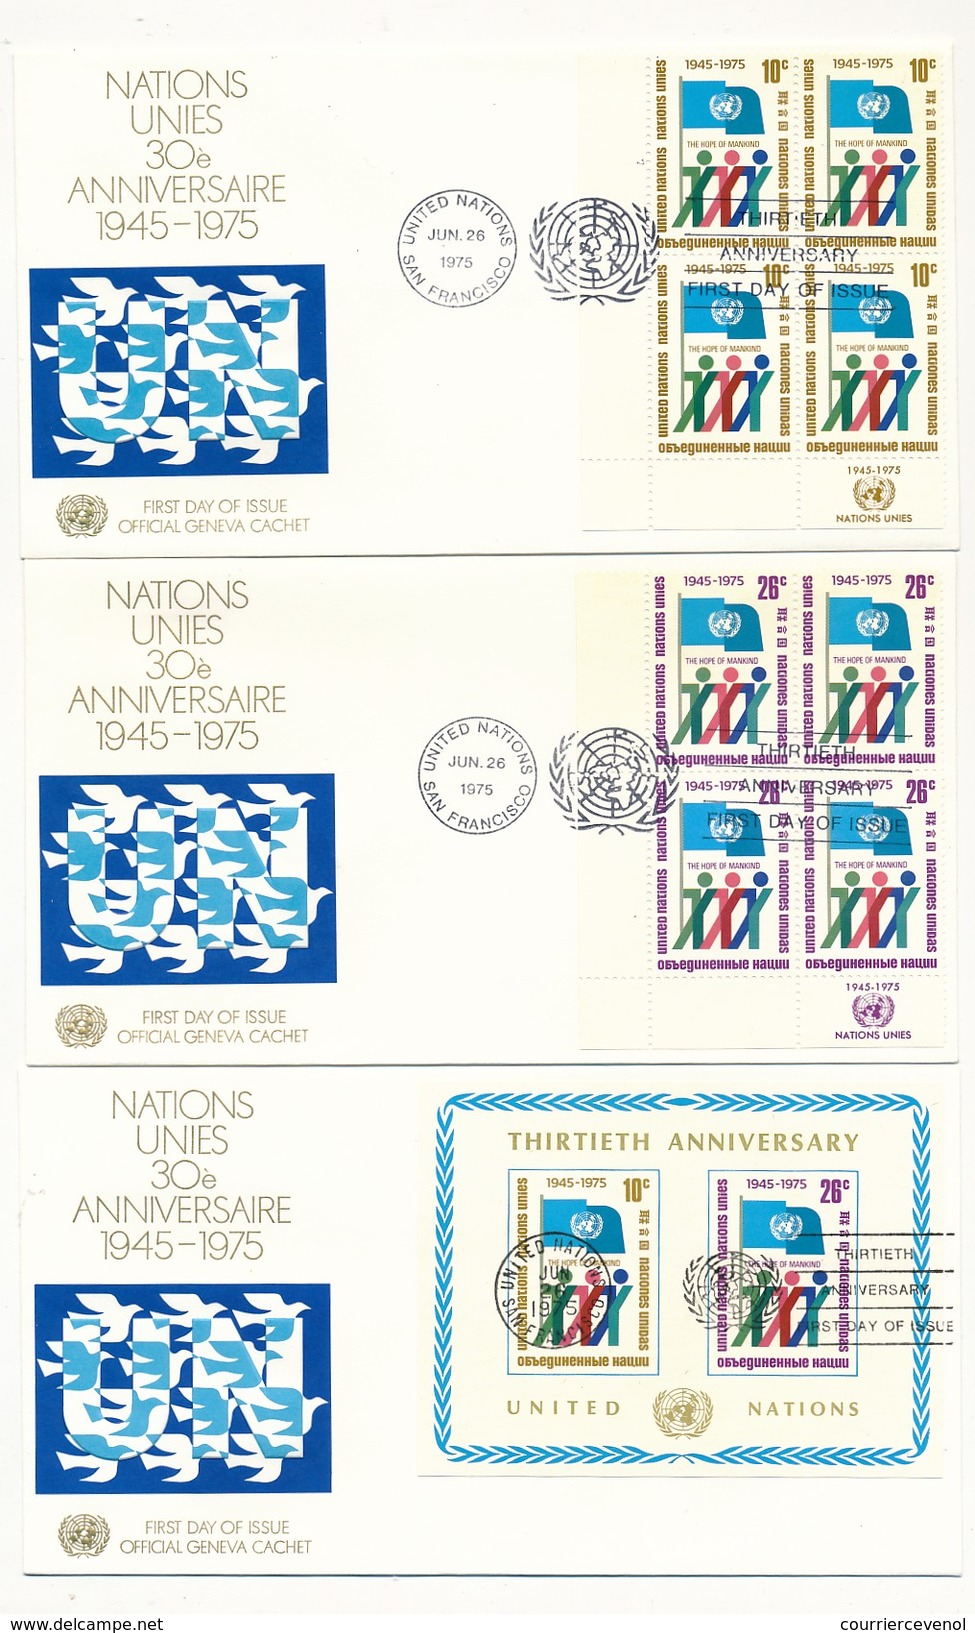 NATIONS UNIES - 16 Enveloppes FDC - 30eme Anniversaire 1975 New York / San Francisco / Genève - UNO